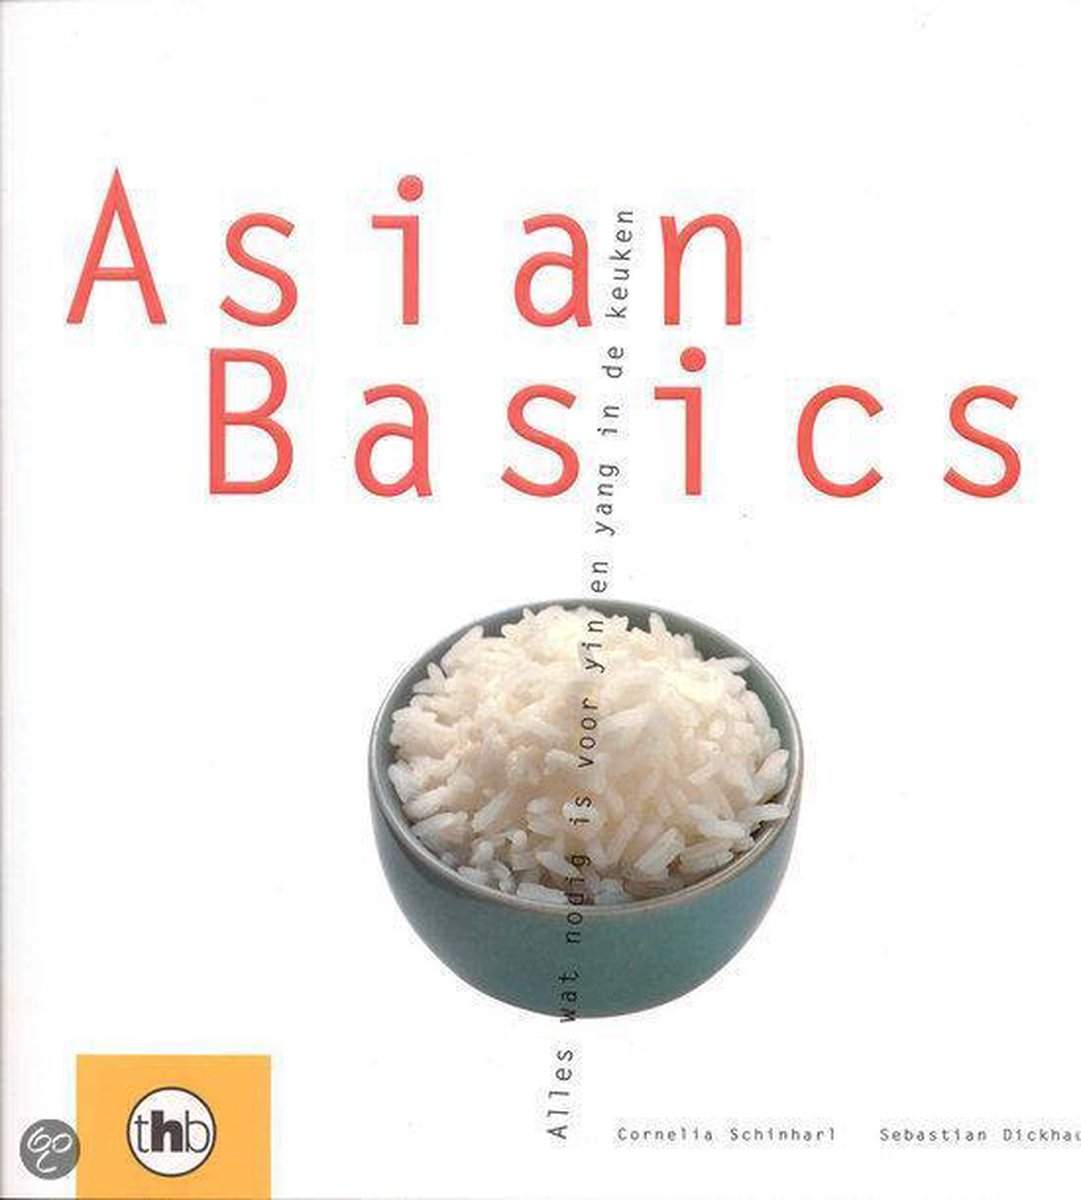 Asian Basics